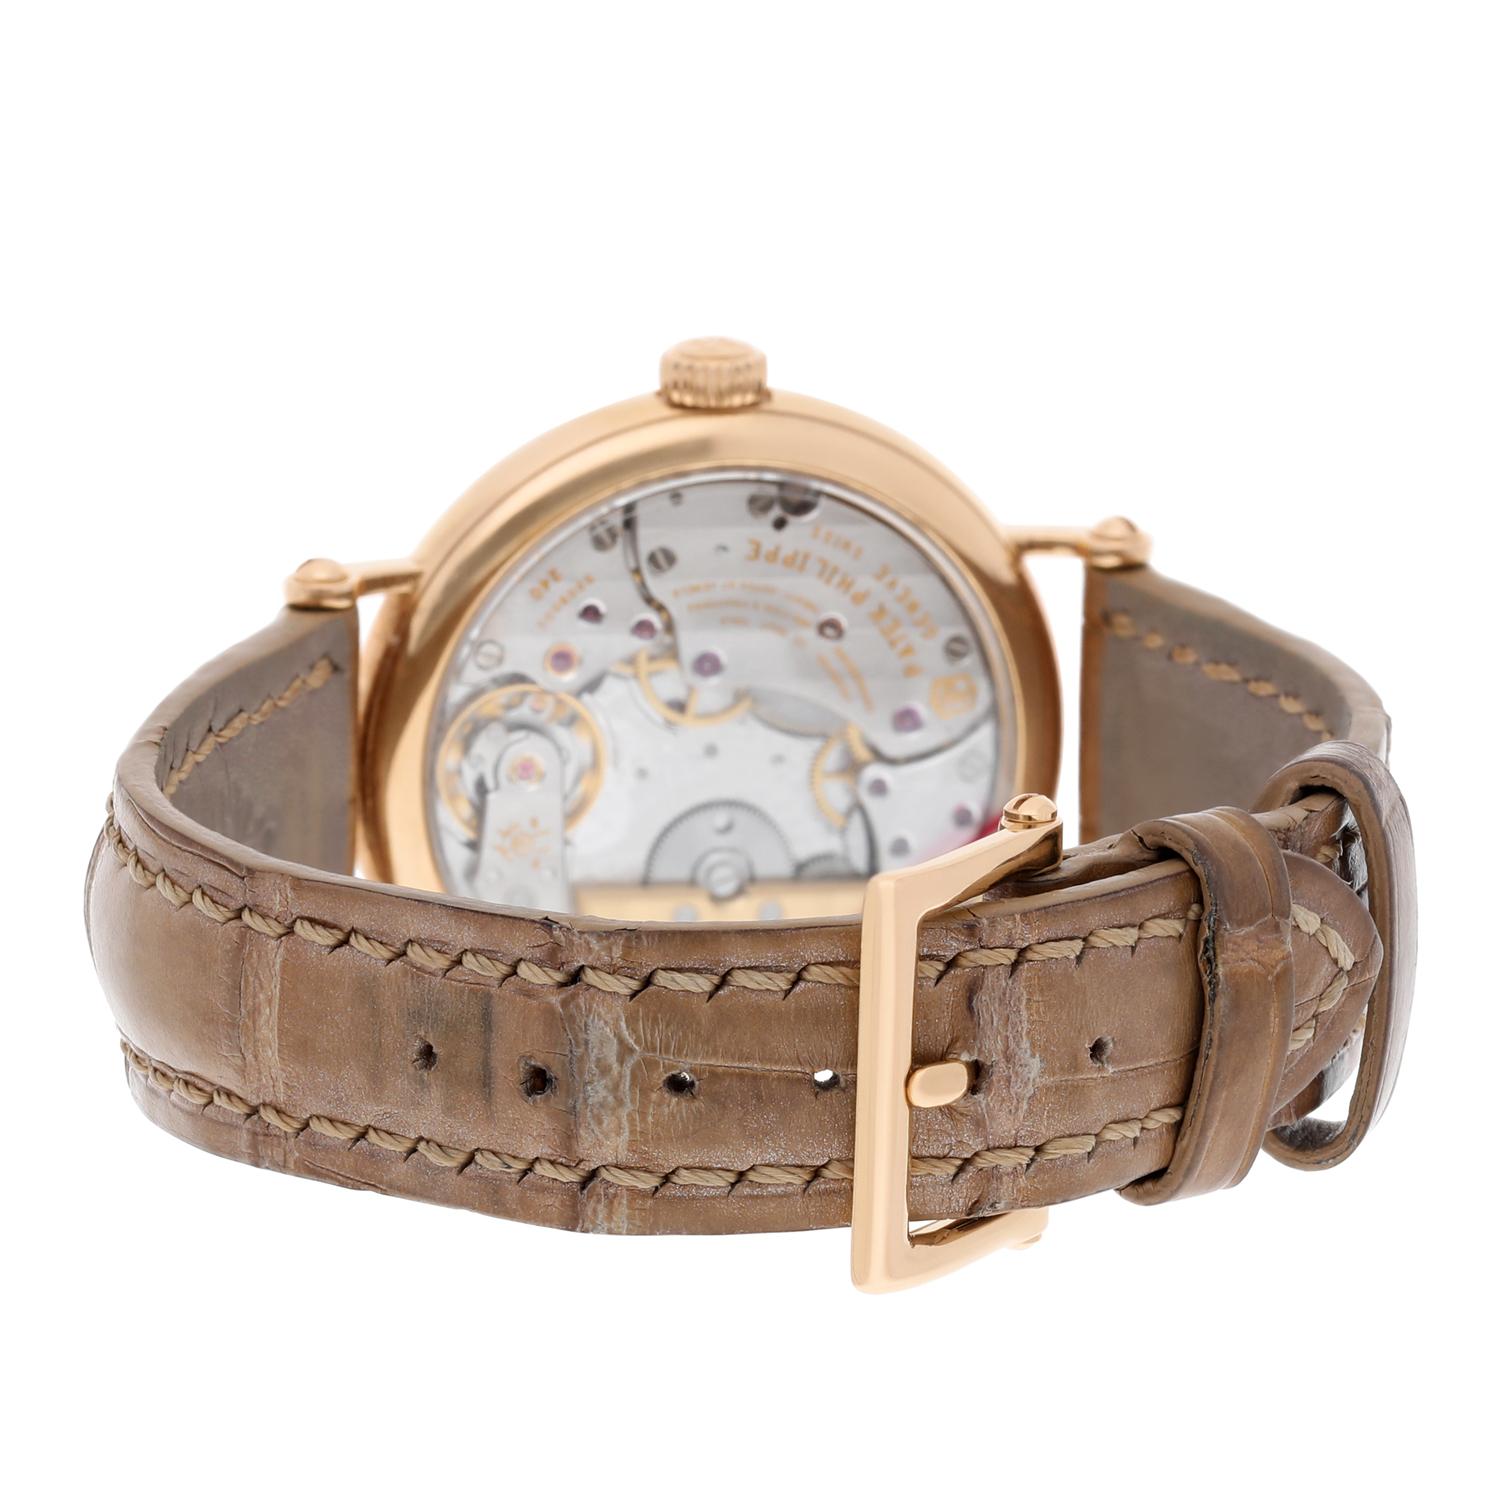 Patek Philippe Calatrava Thin 18kt Rose Gold Automatic Ladies Watch 7200R-001 For Sale 3